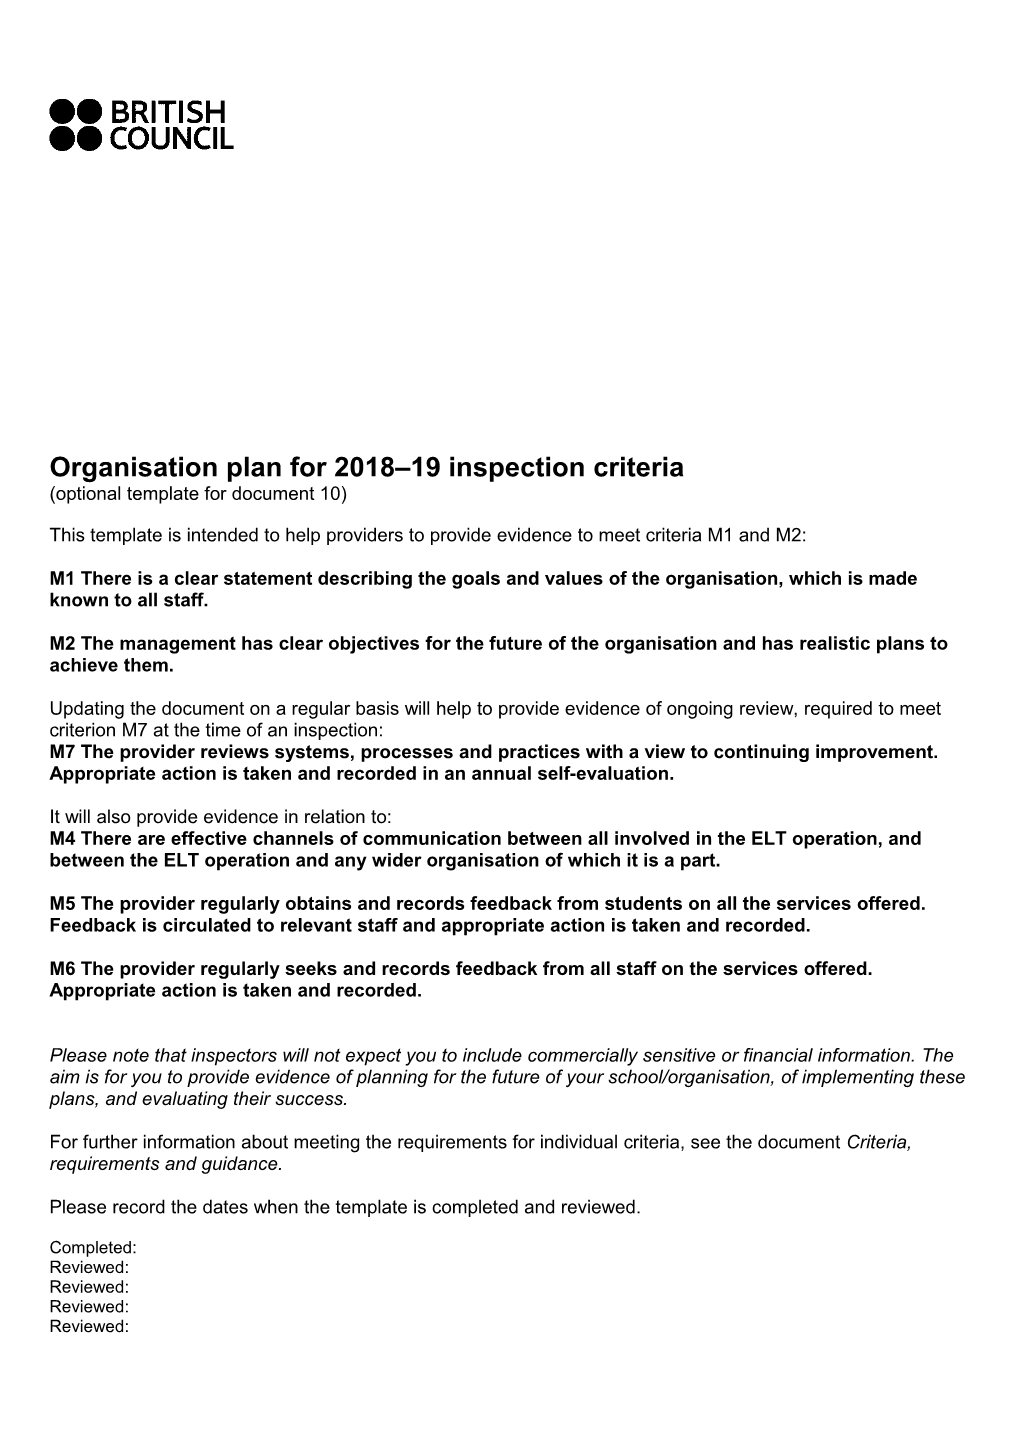 Organisation Plan for 2018 19 Inspection Criteria